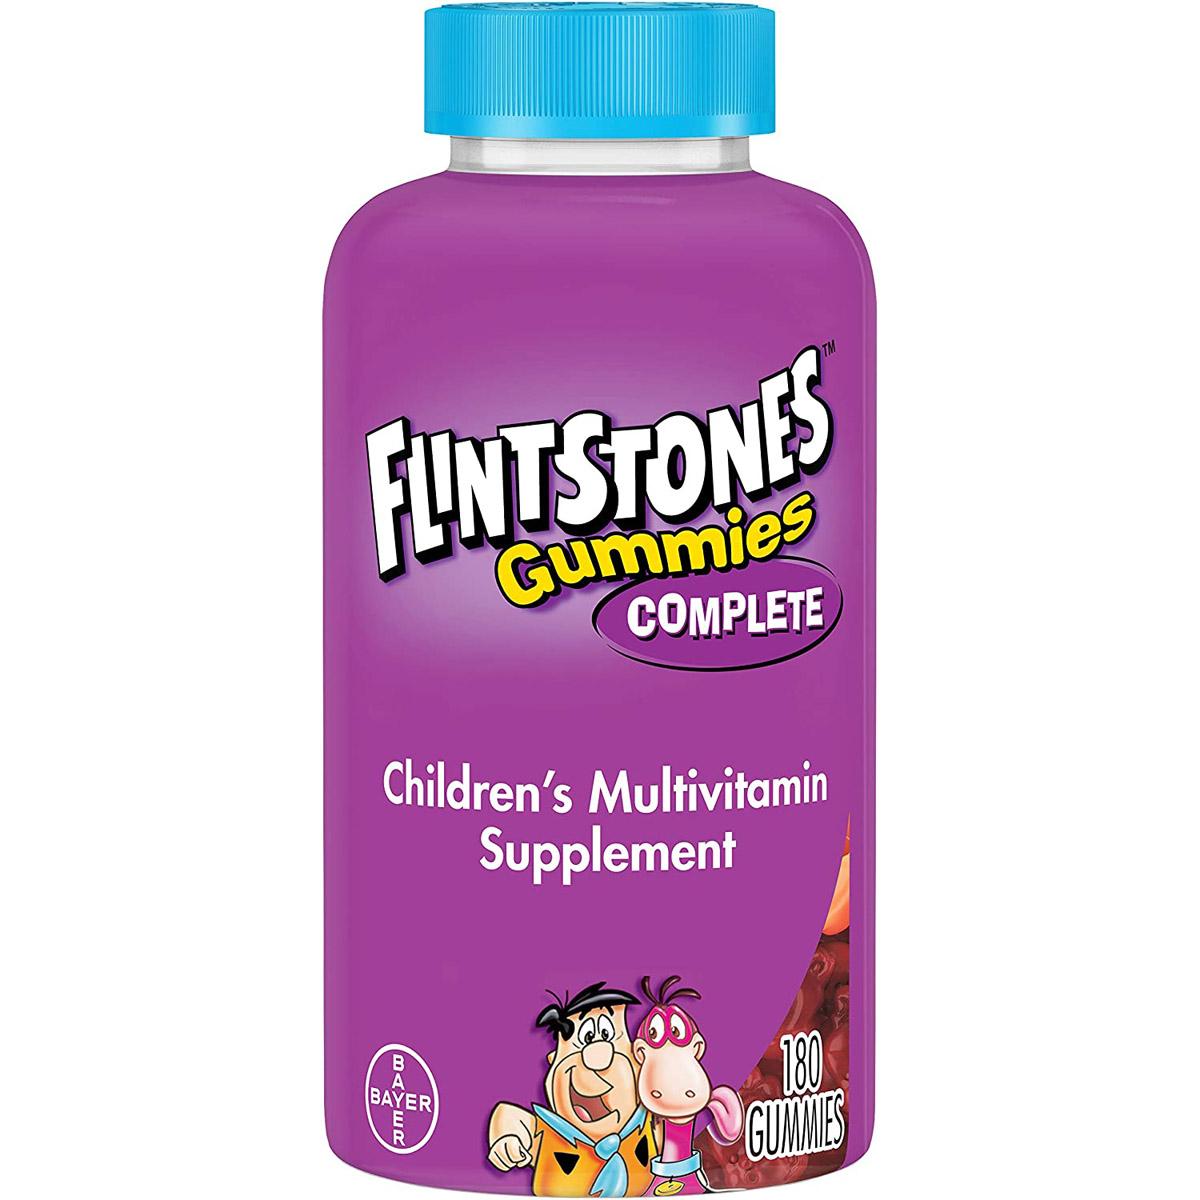 180 Flintstones Gummies Kids Vitamins for $9.64